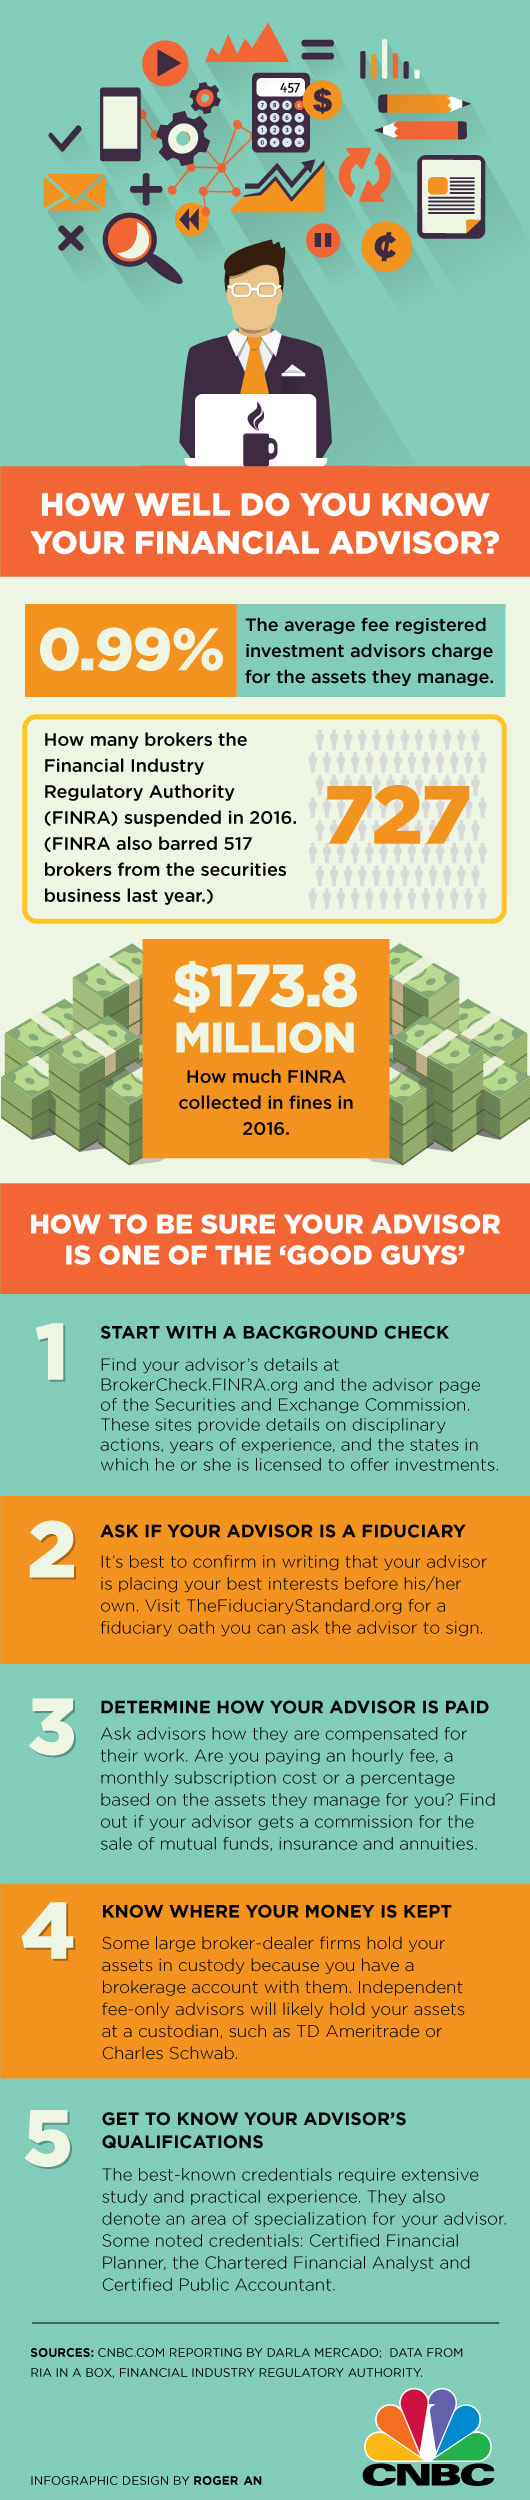 Vetting a financial advisor infographic